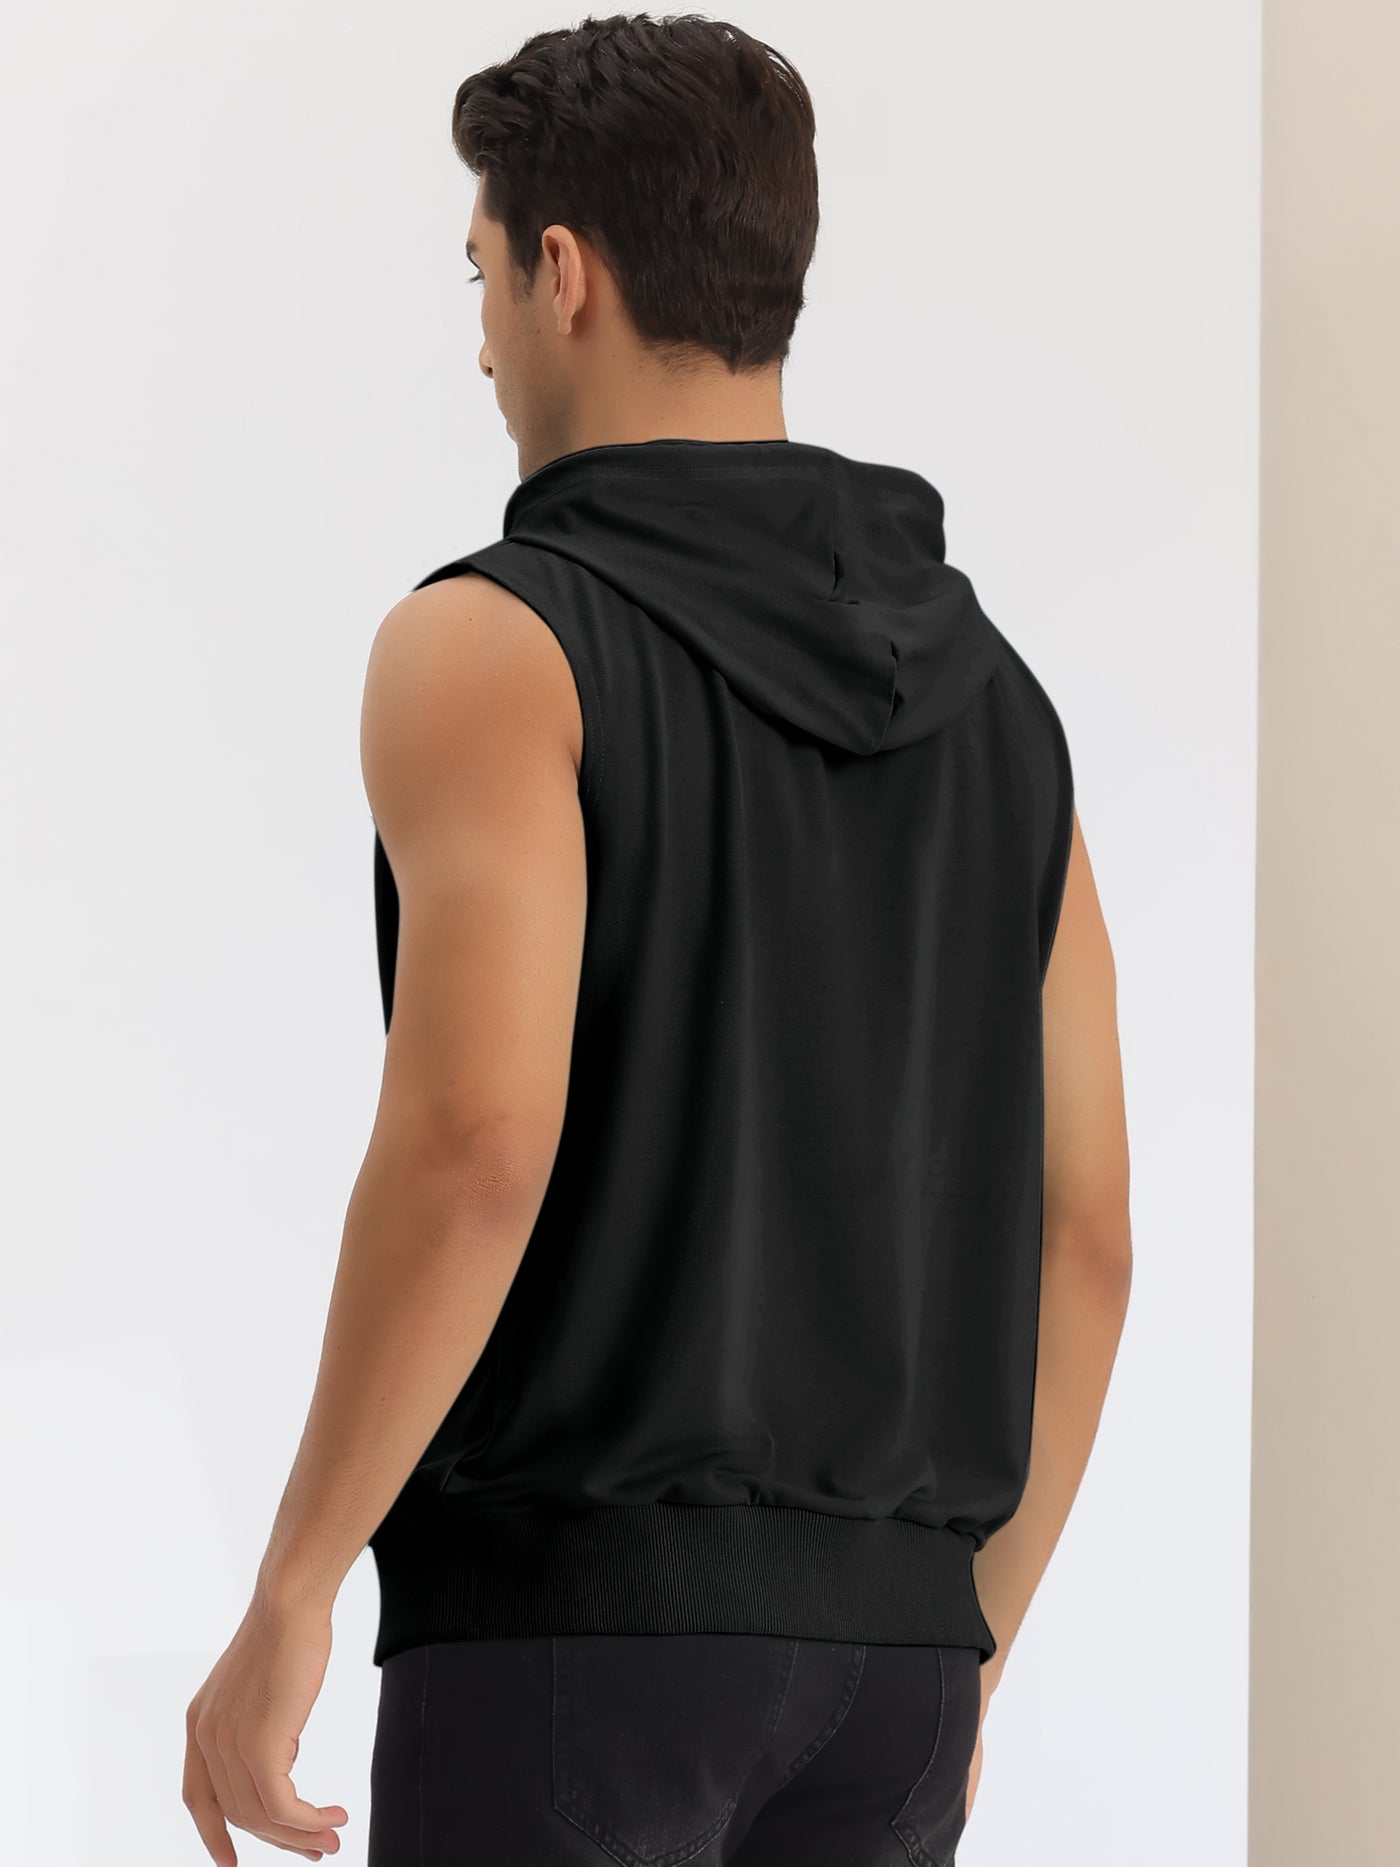 Bublédon Sleeveless Hoodie for Men's Zipper Drawstring Hooded Sweatshirt Vest